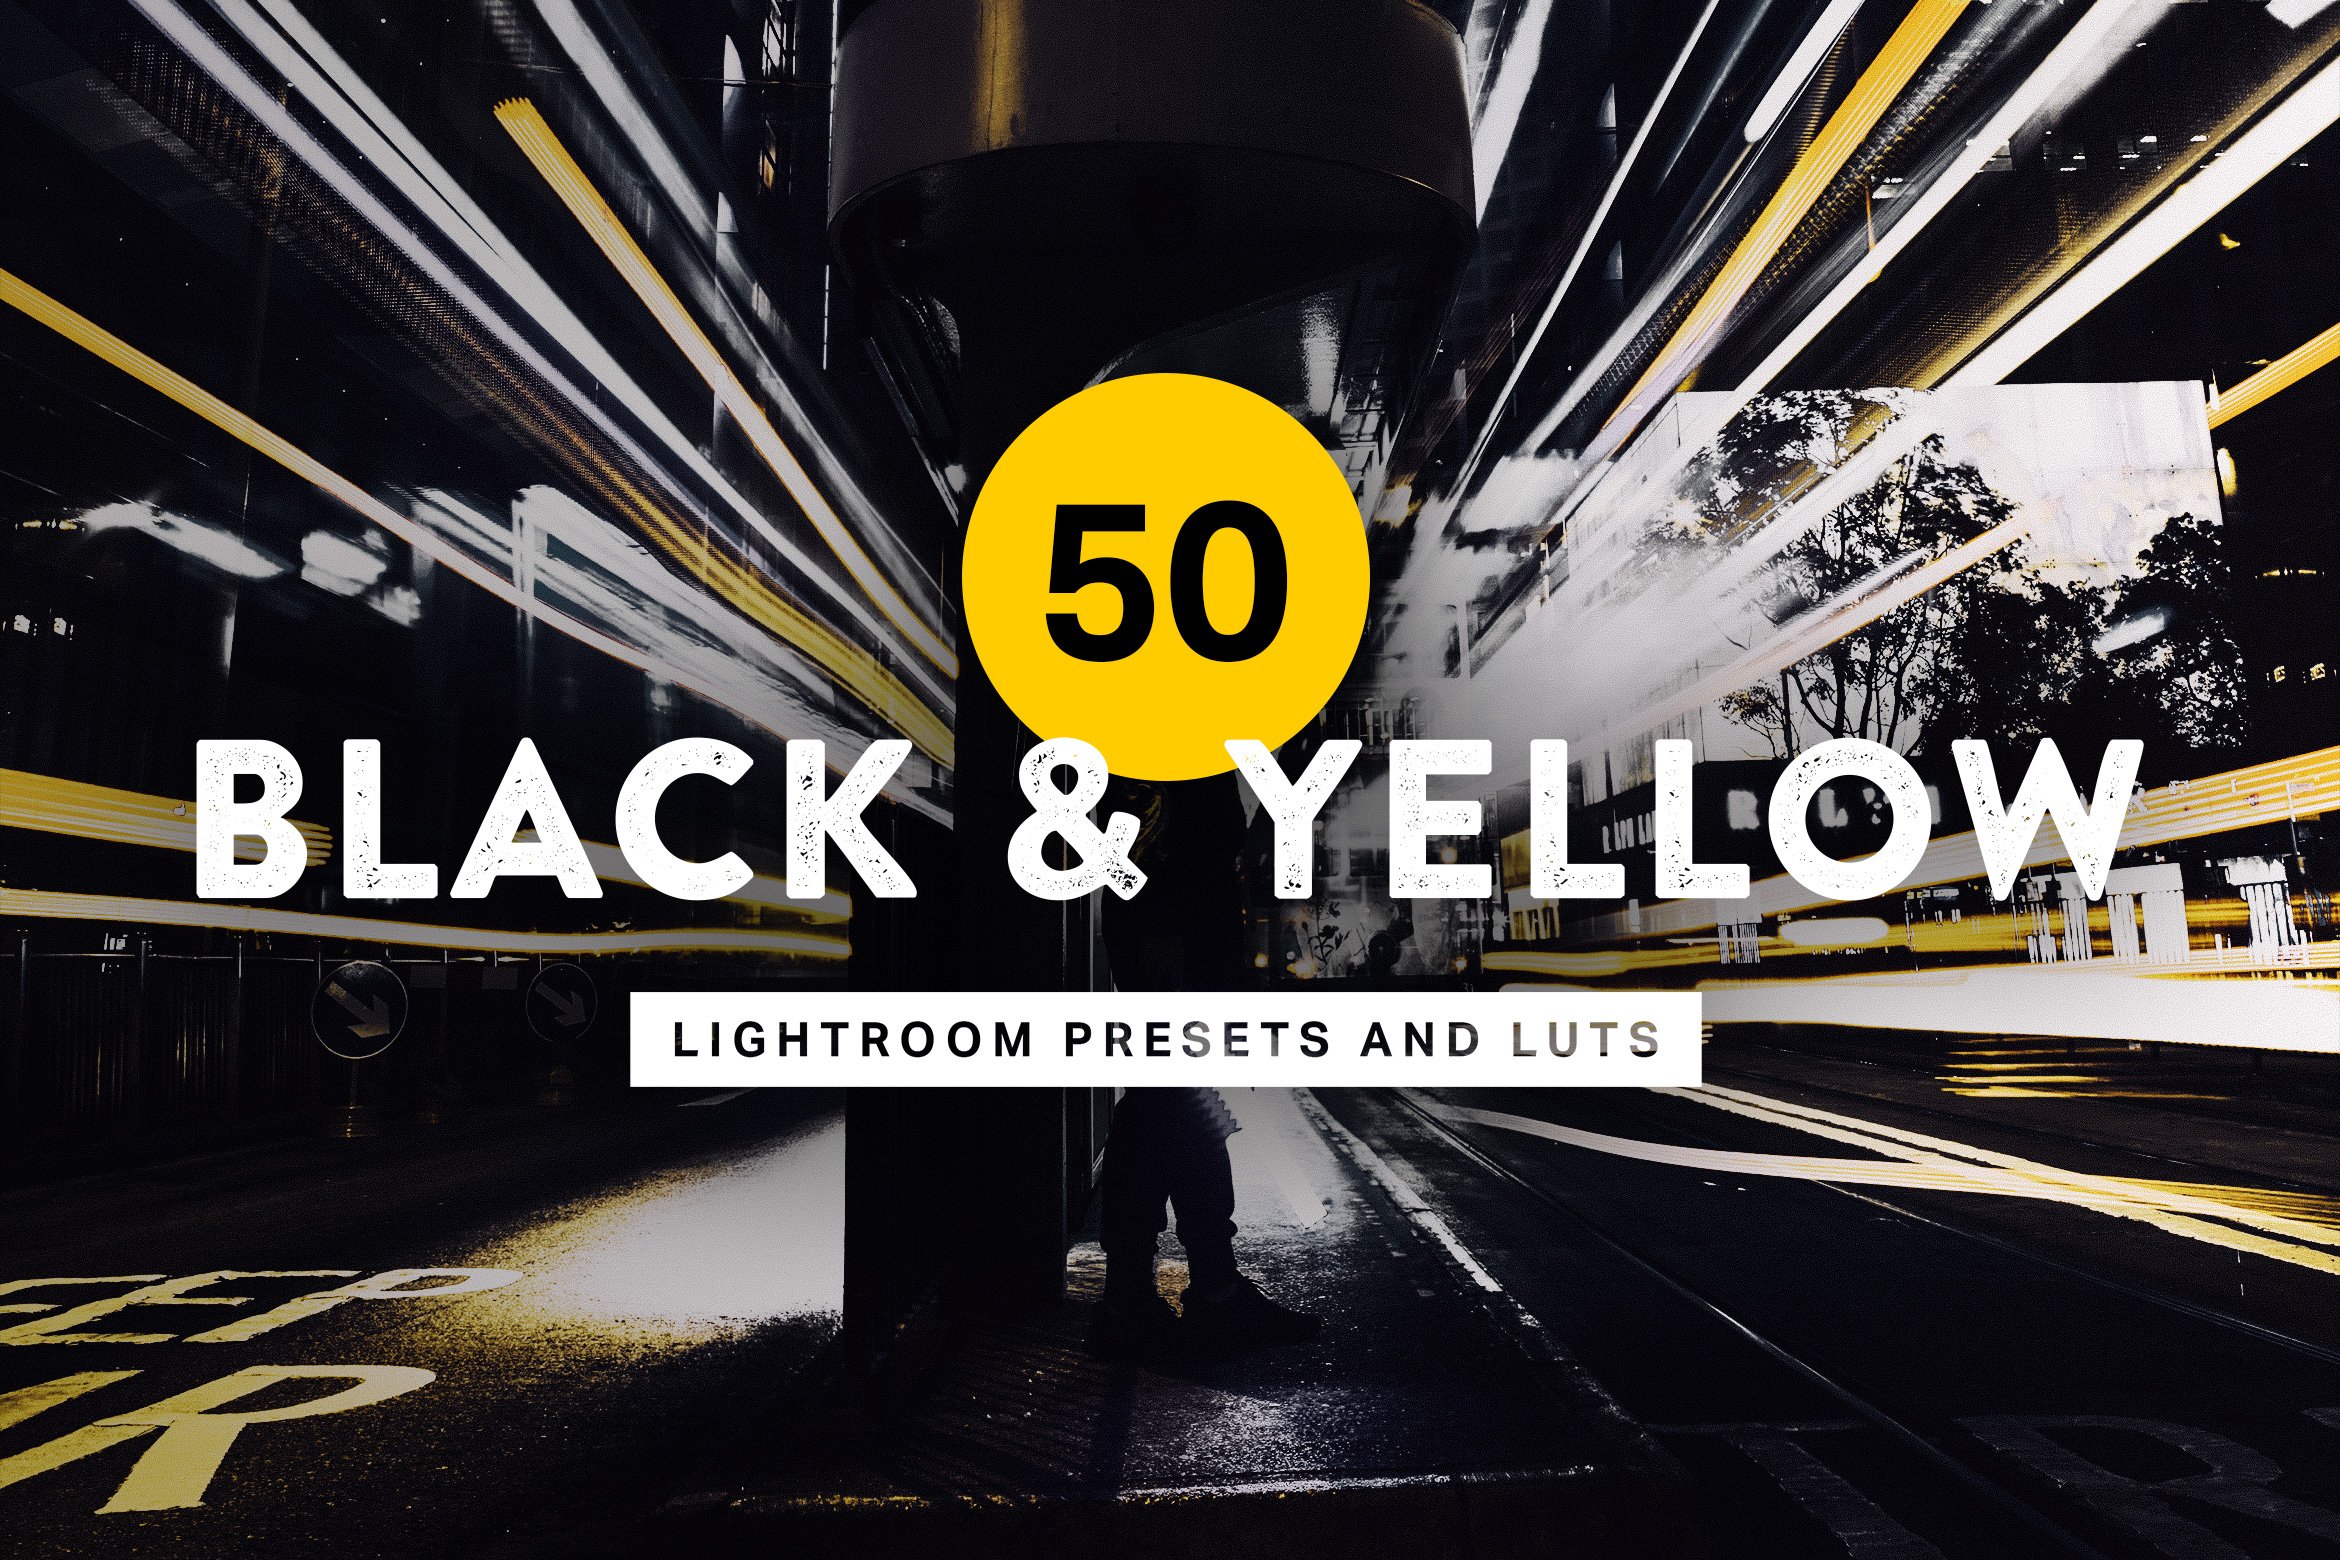 50 Black & Yellow Lightroom Presetscover image.